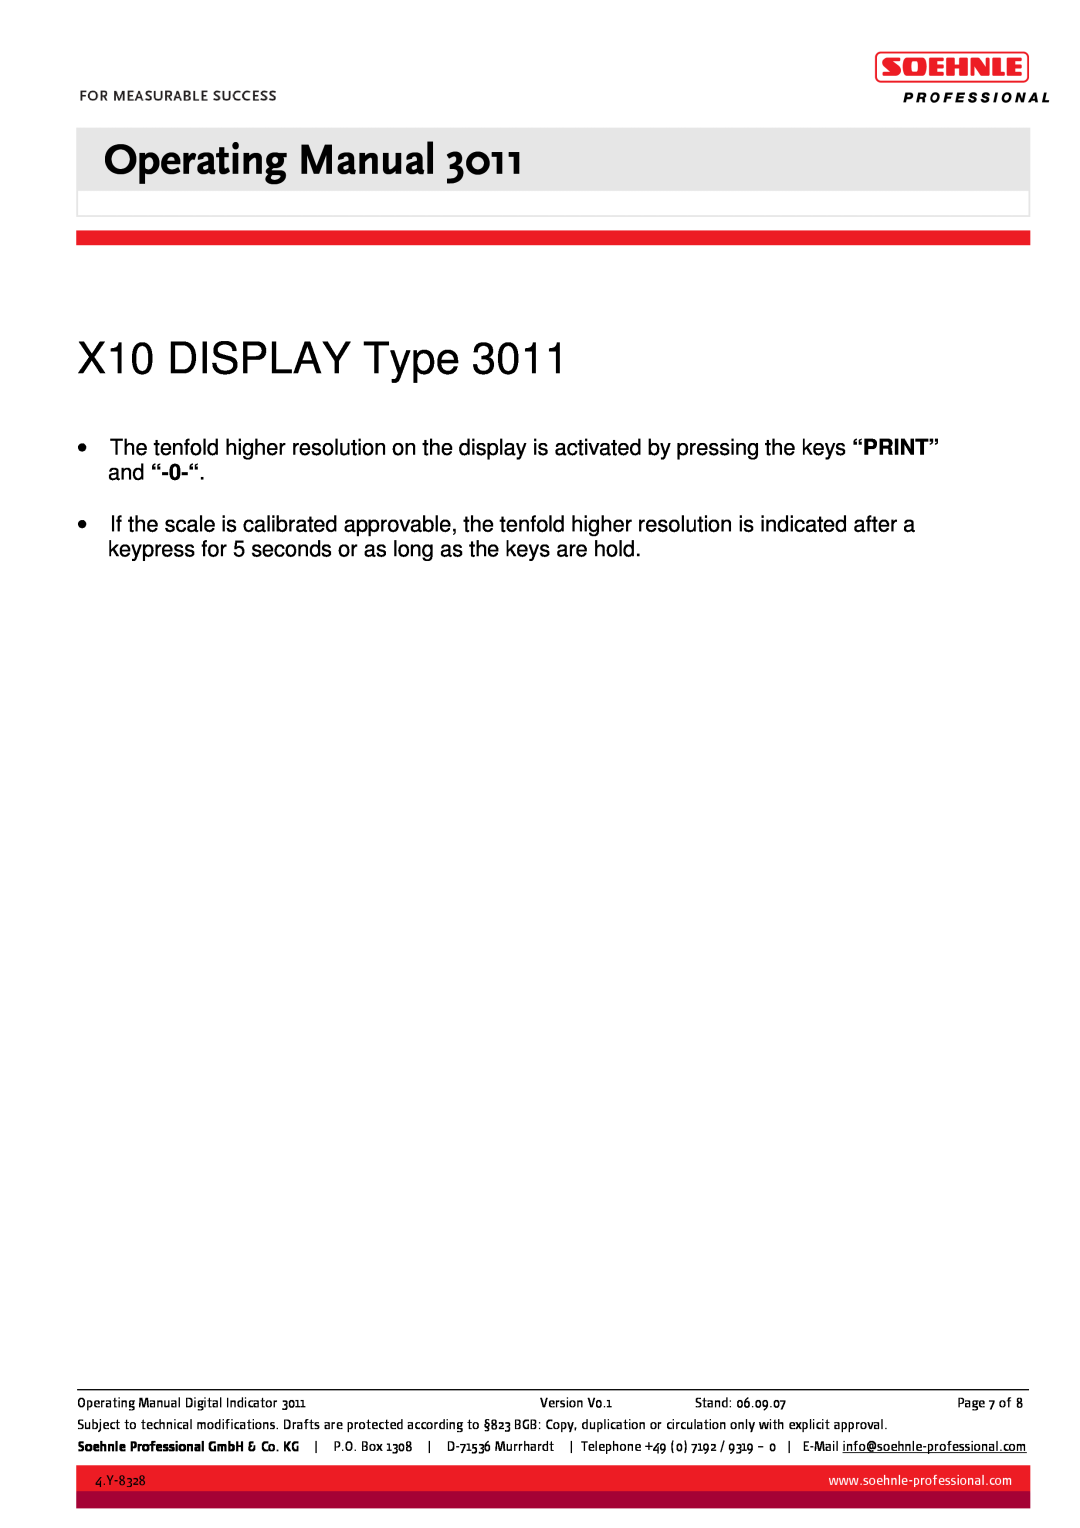 Soehnle 3011 manual X10 DISPLAY Type, Operating Manual 